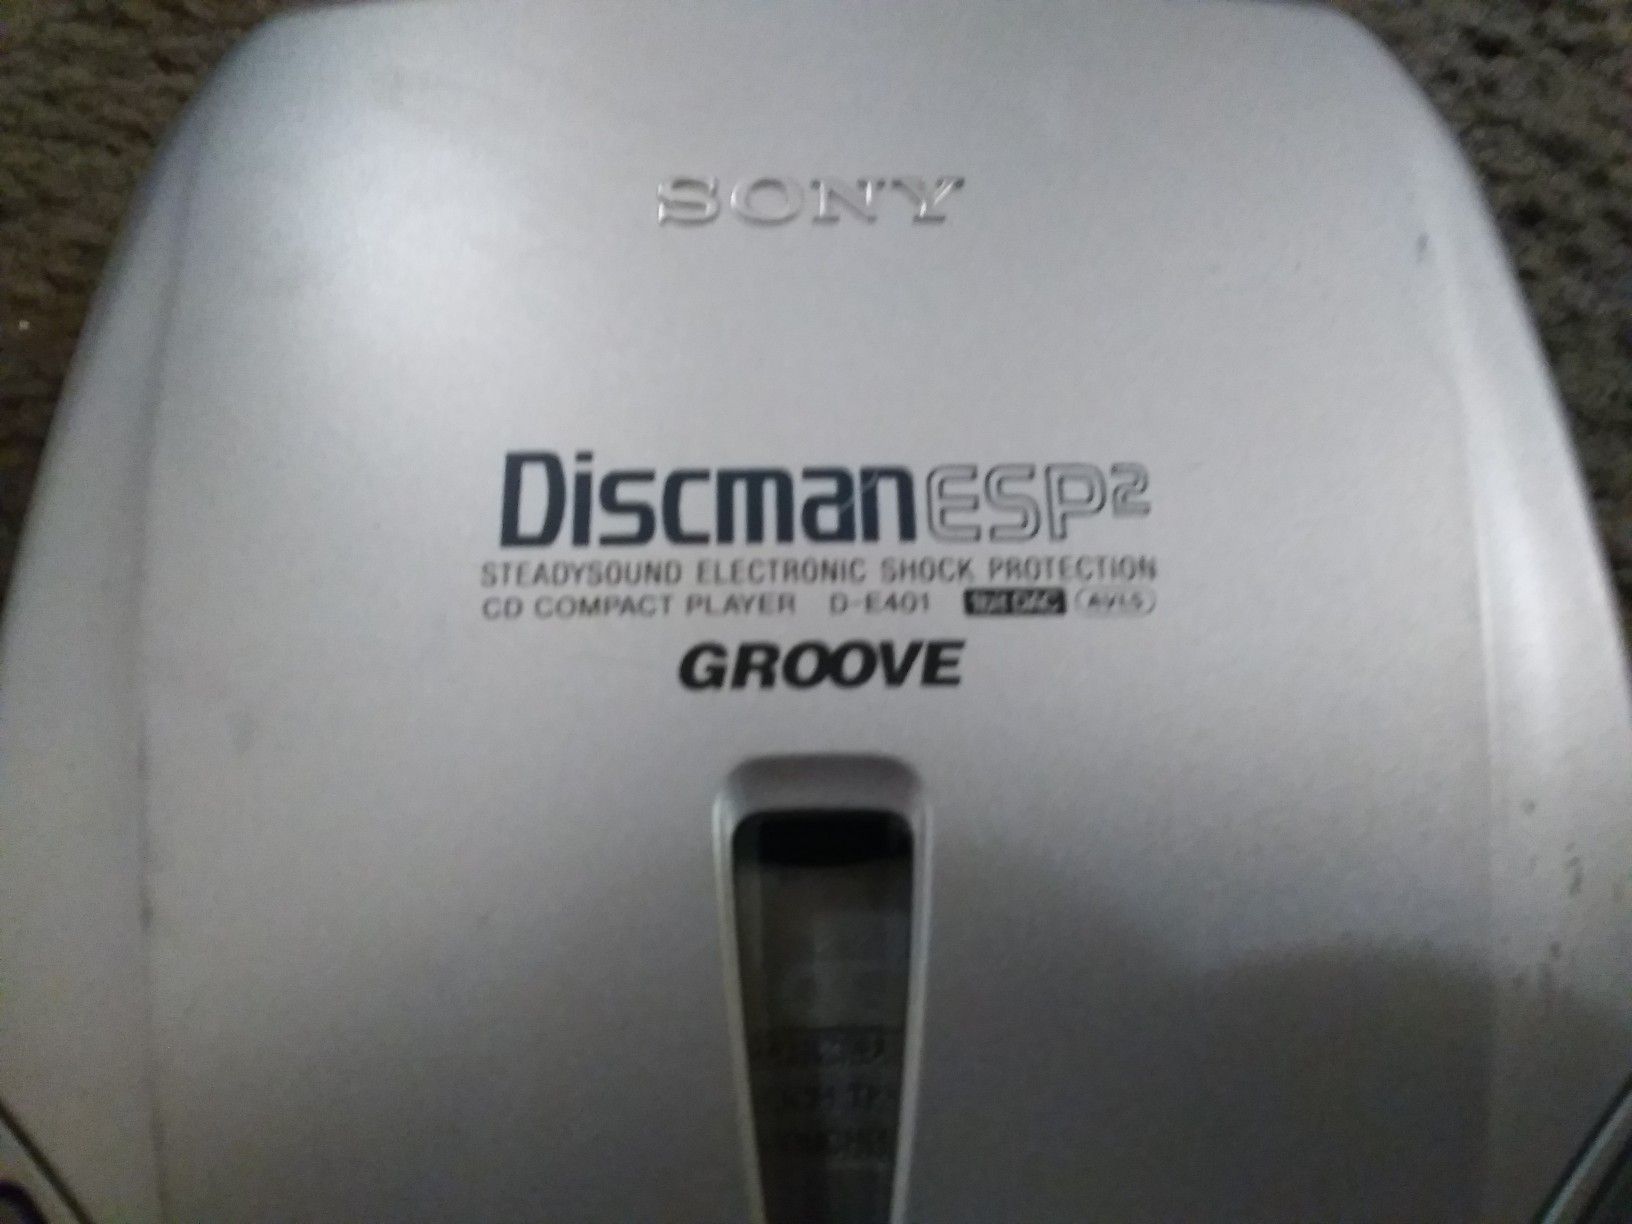 Sony D-E401 Discman CD Player